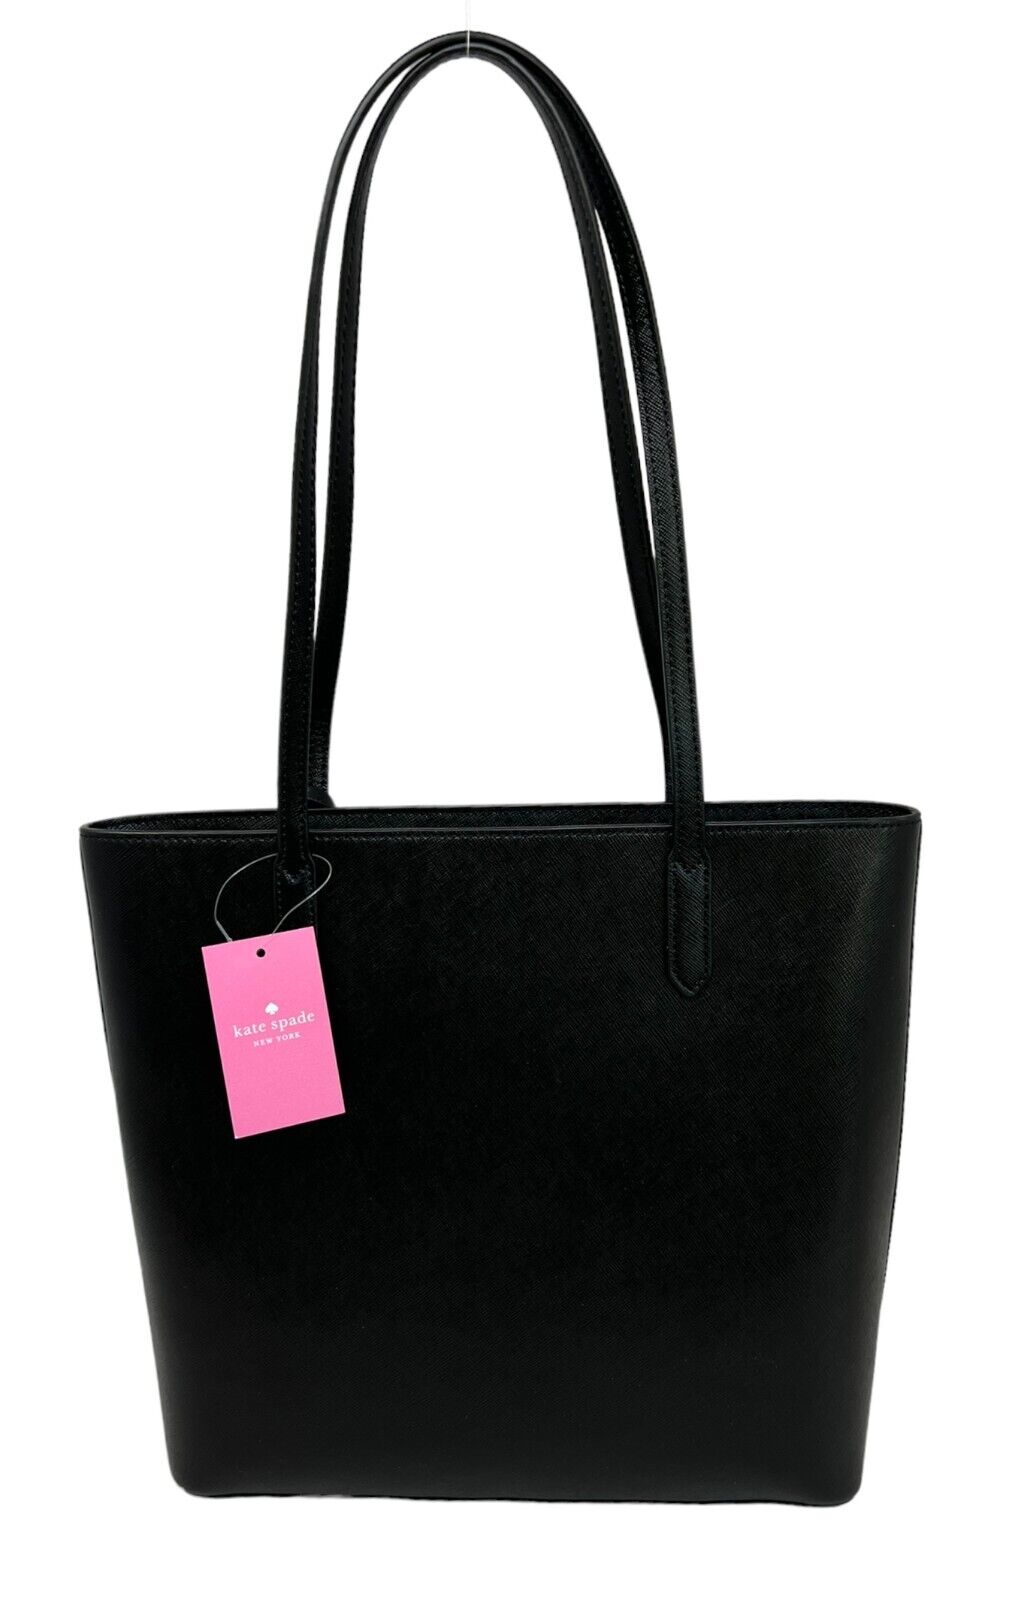 Kate Spade Jana Tote Black Saffiano Leather Handbag K8150 $359